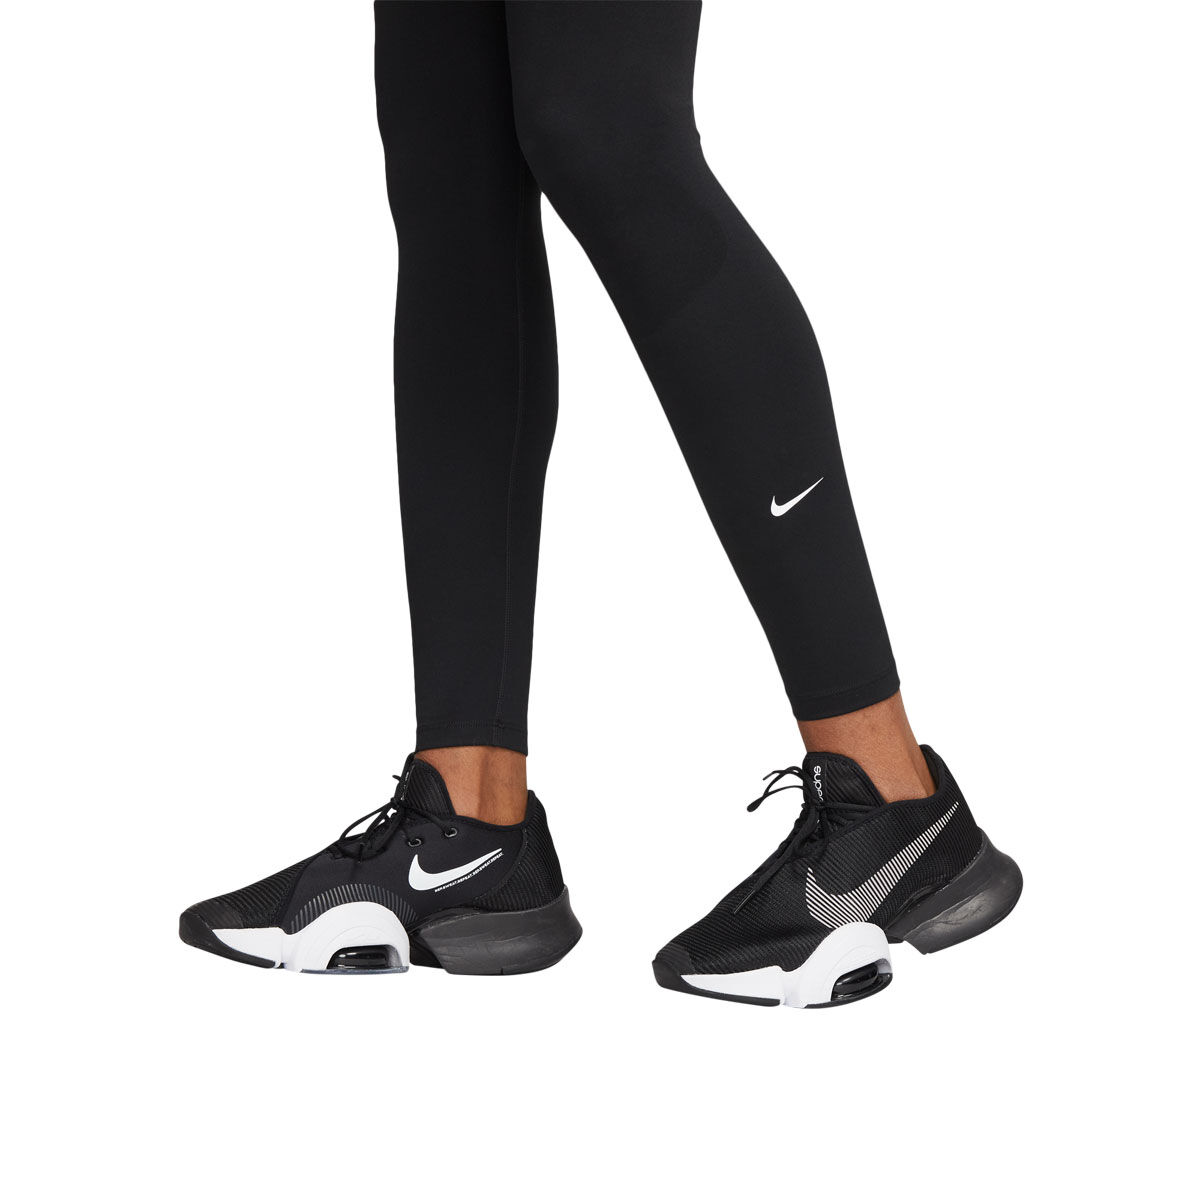 Black Sport Dri-FIT Leggings by Nike Jordan on Sale